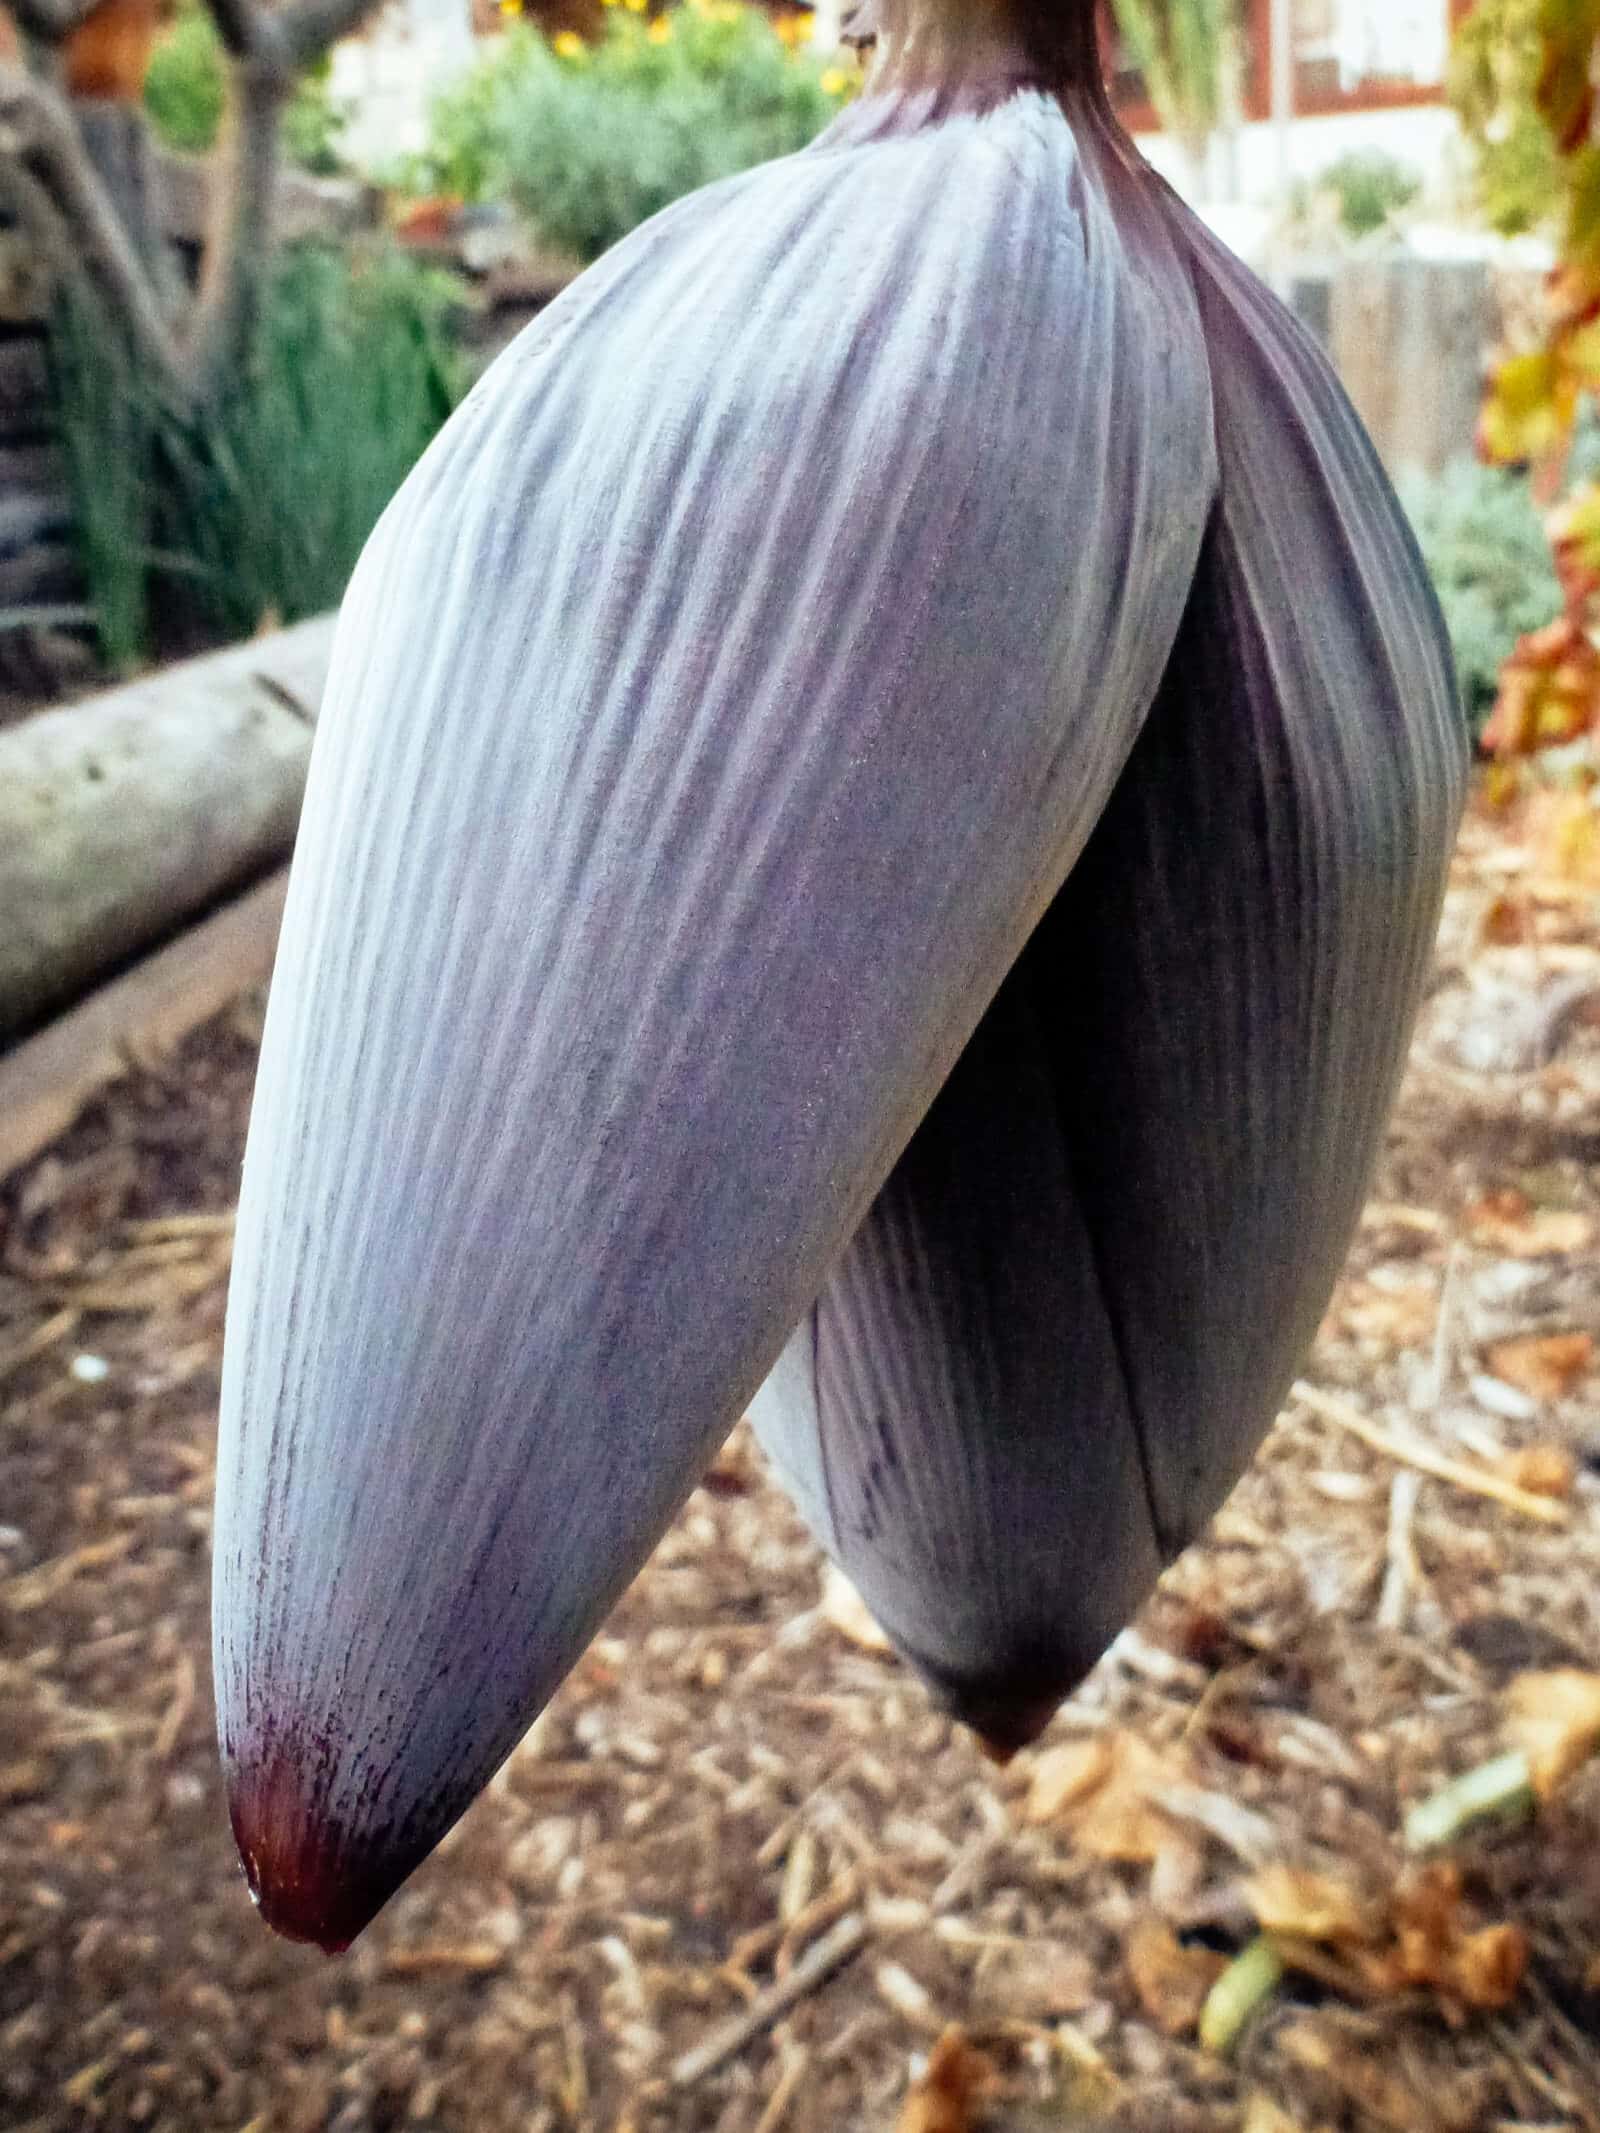 Deep purple inflorescence (bud) on a banana plant, also called a banana heart